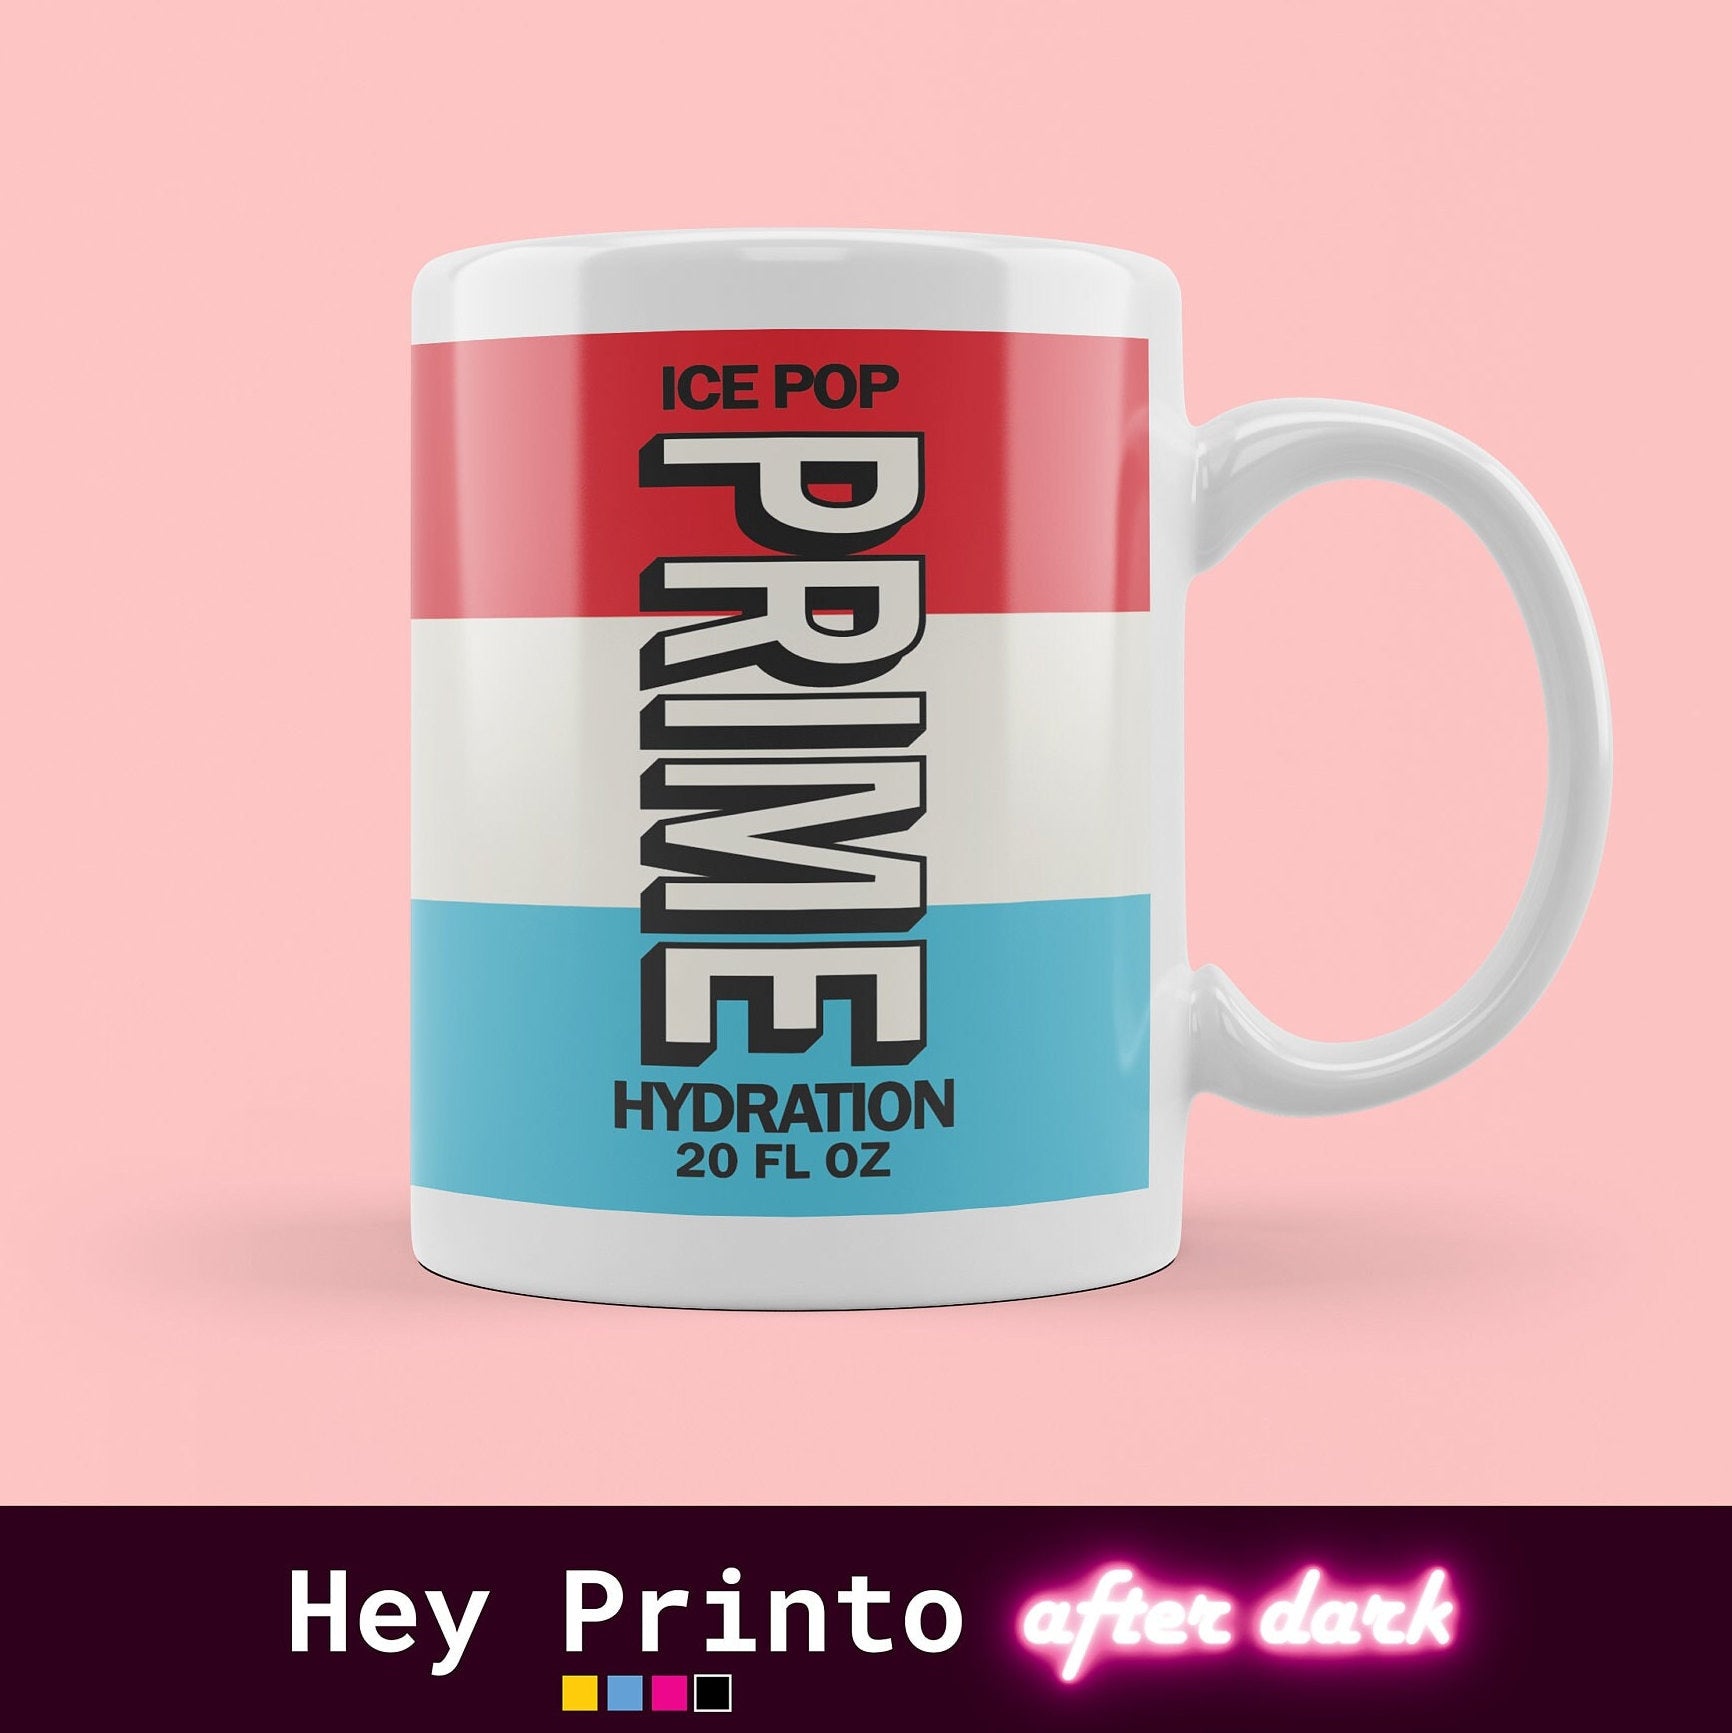 Prime mug, logan paul merch, ice pop prime mug, fun gift